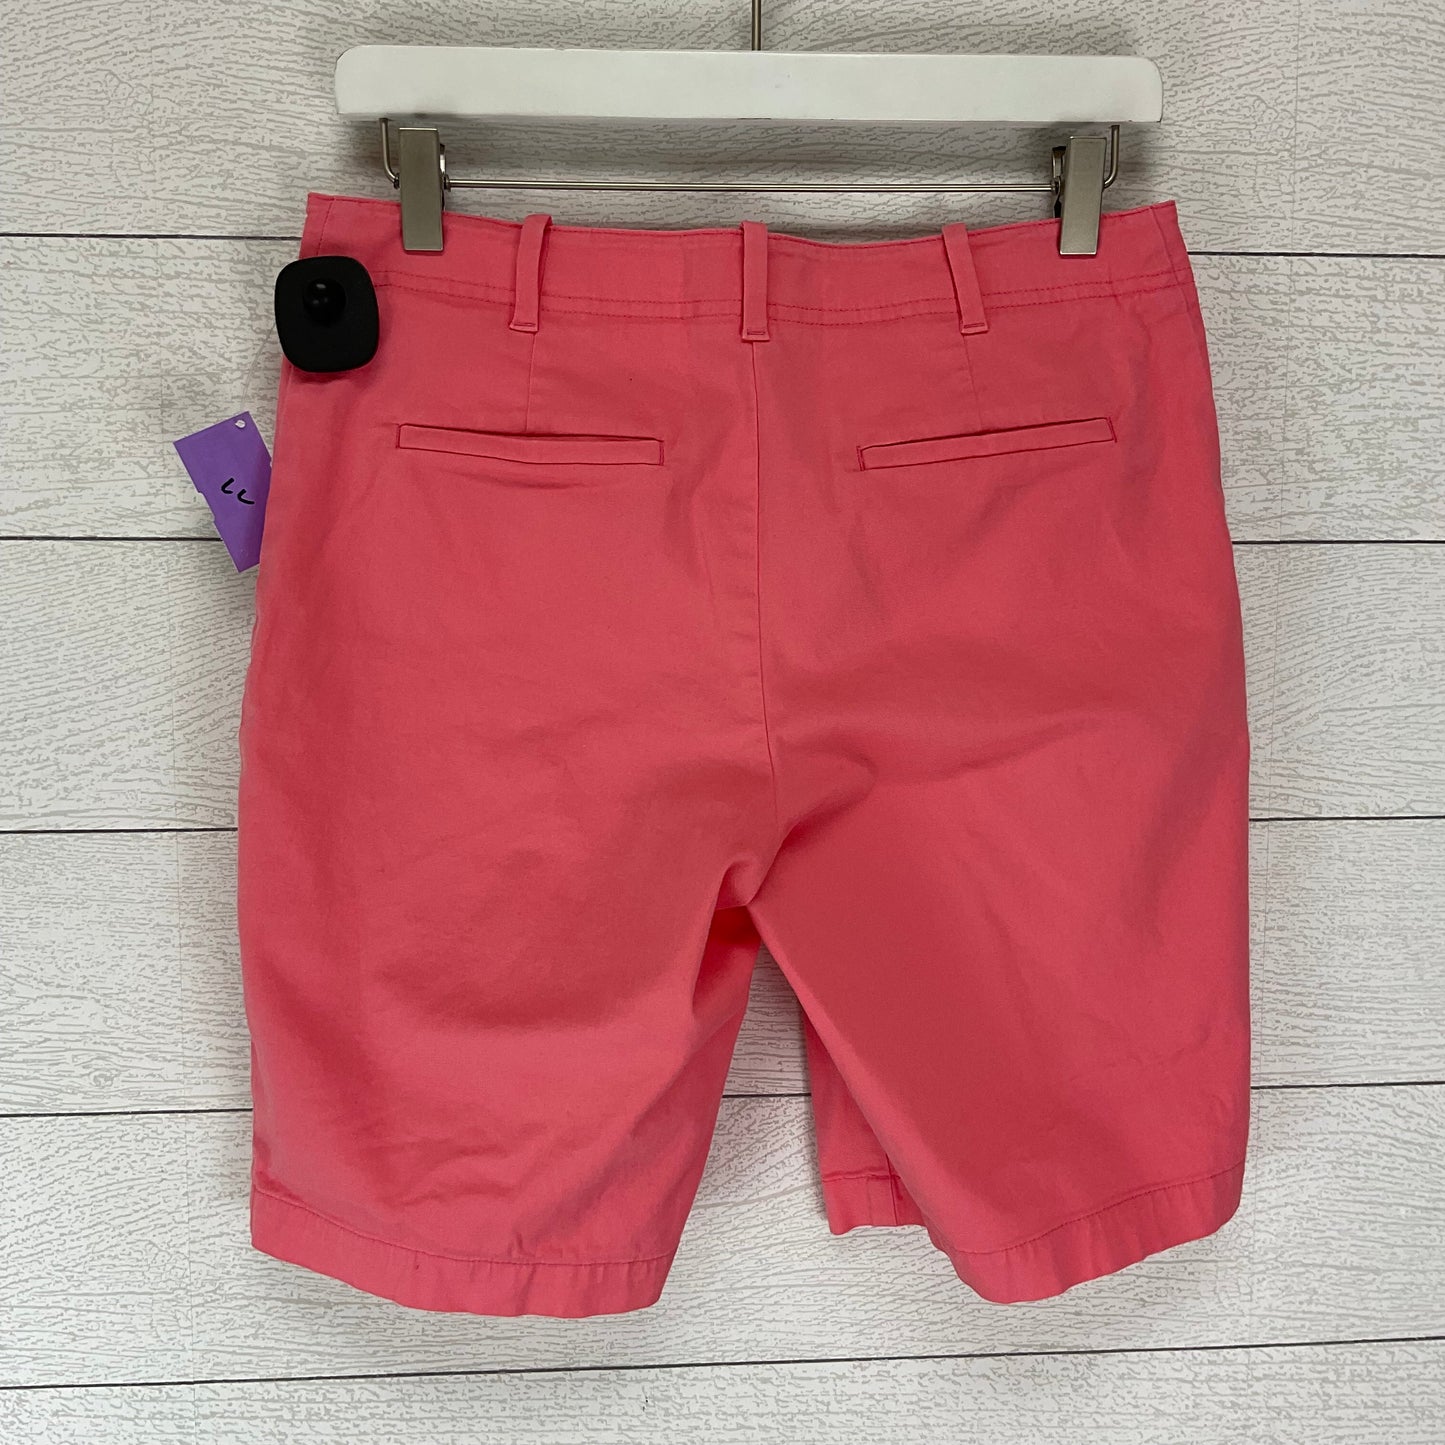 Pink Shorts Talbots, Size 6